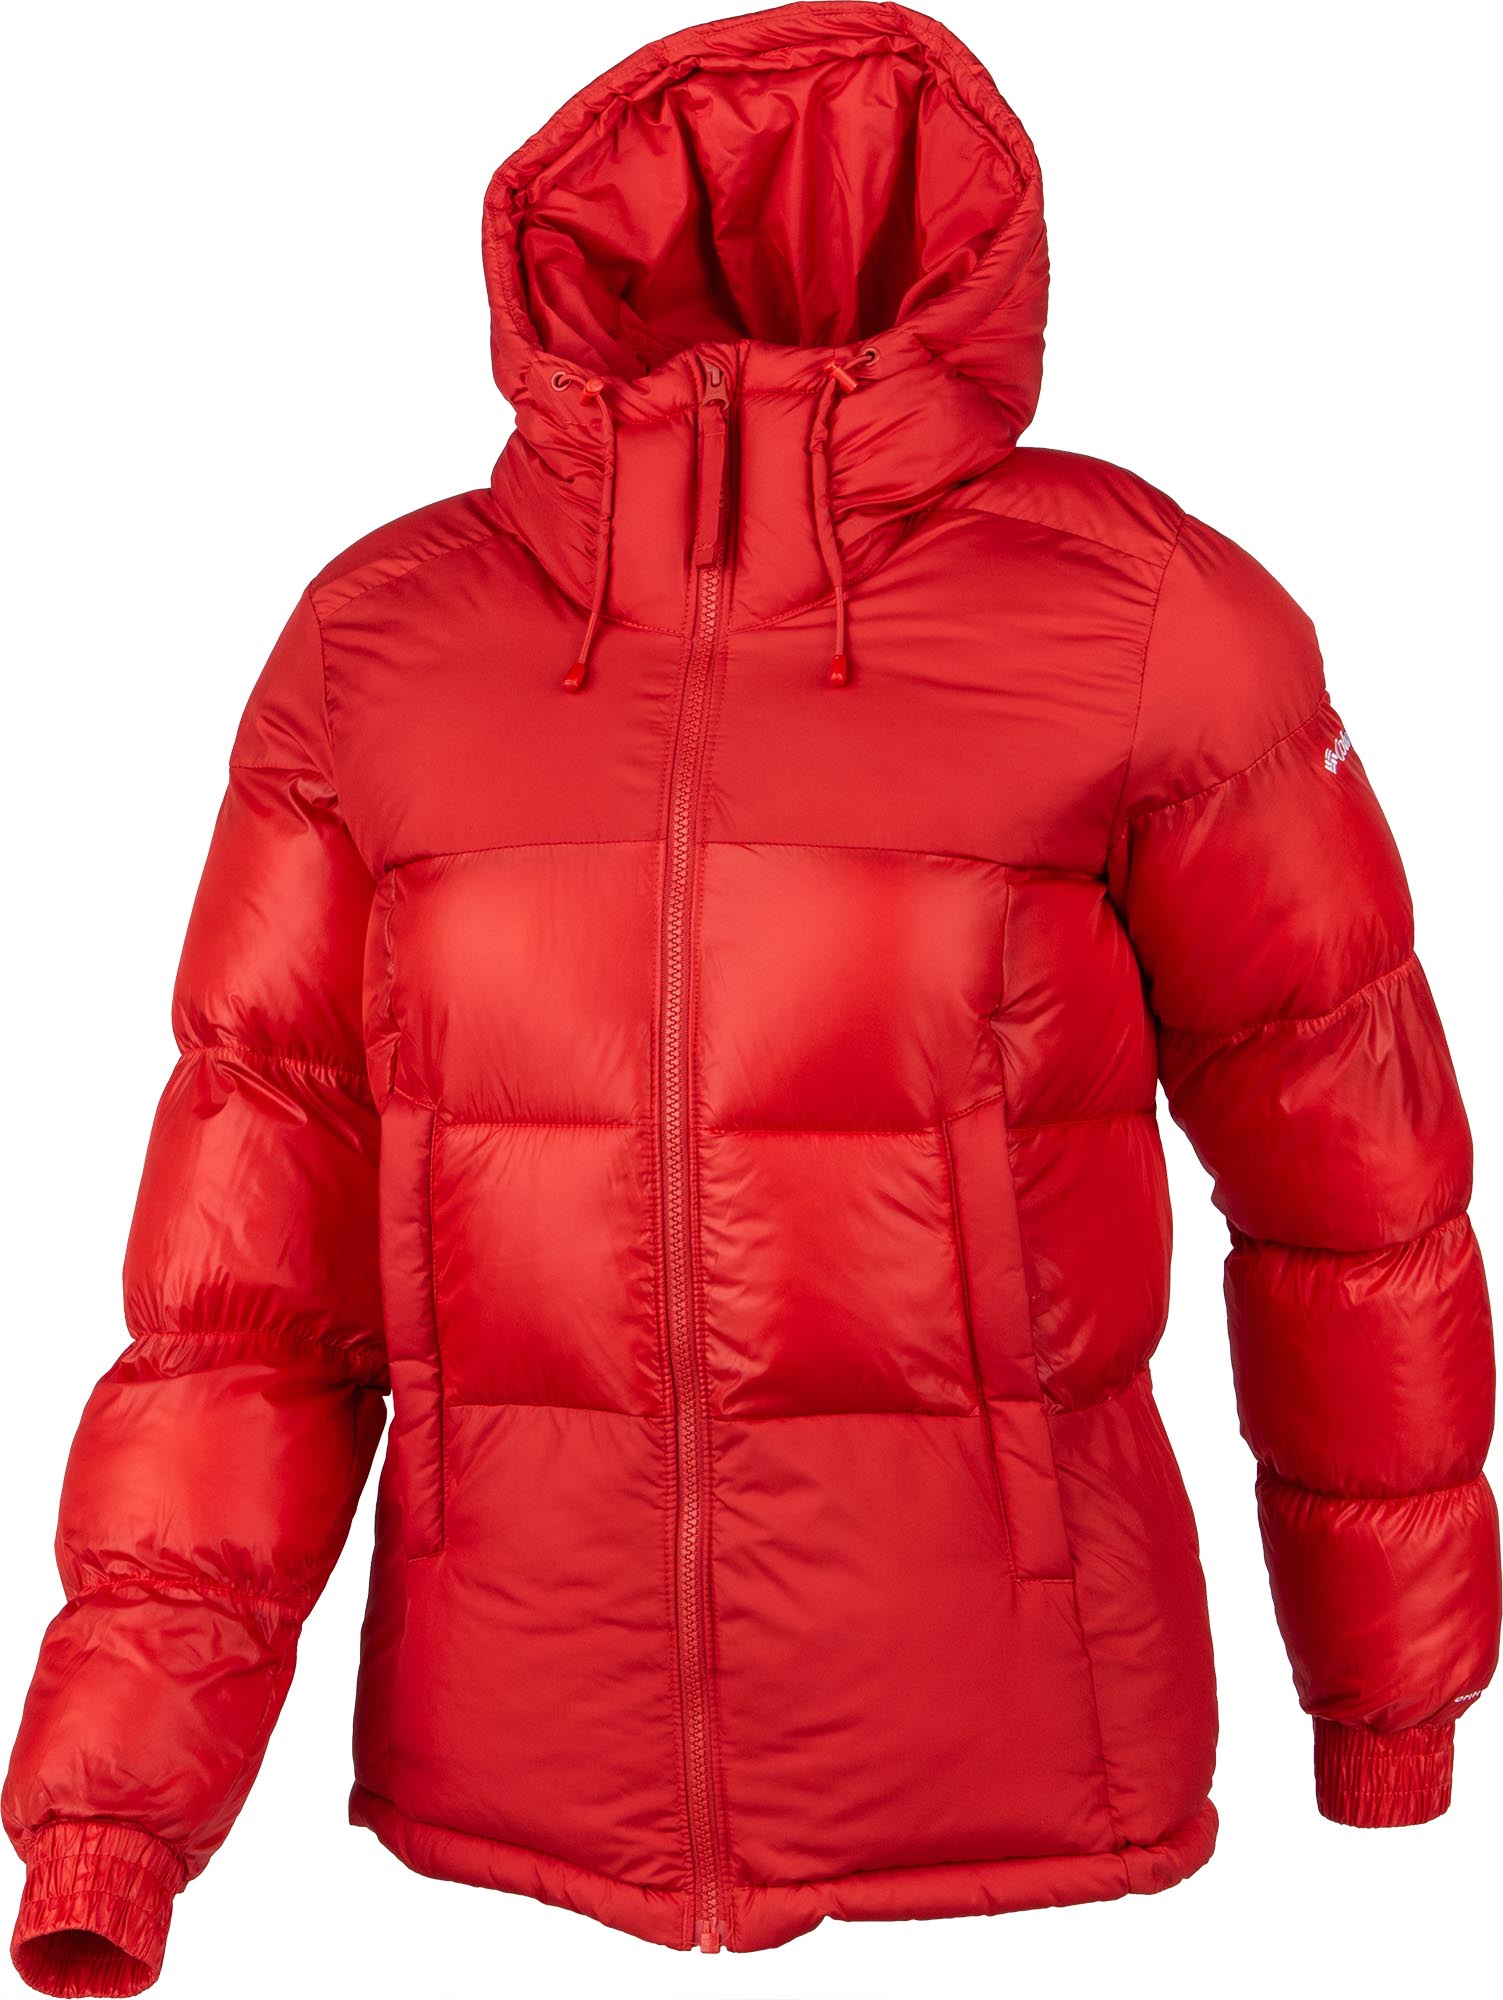 Women's insulated jacket